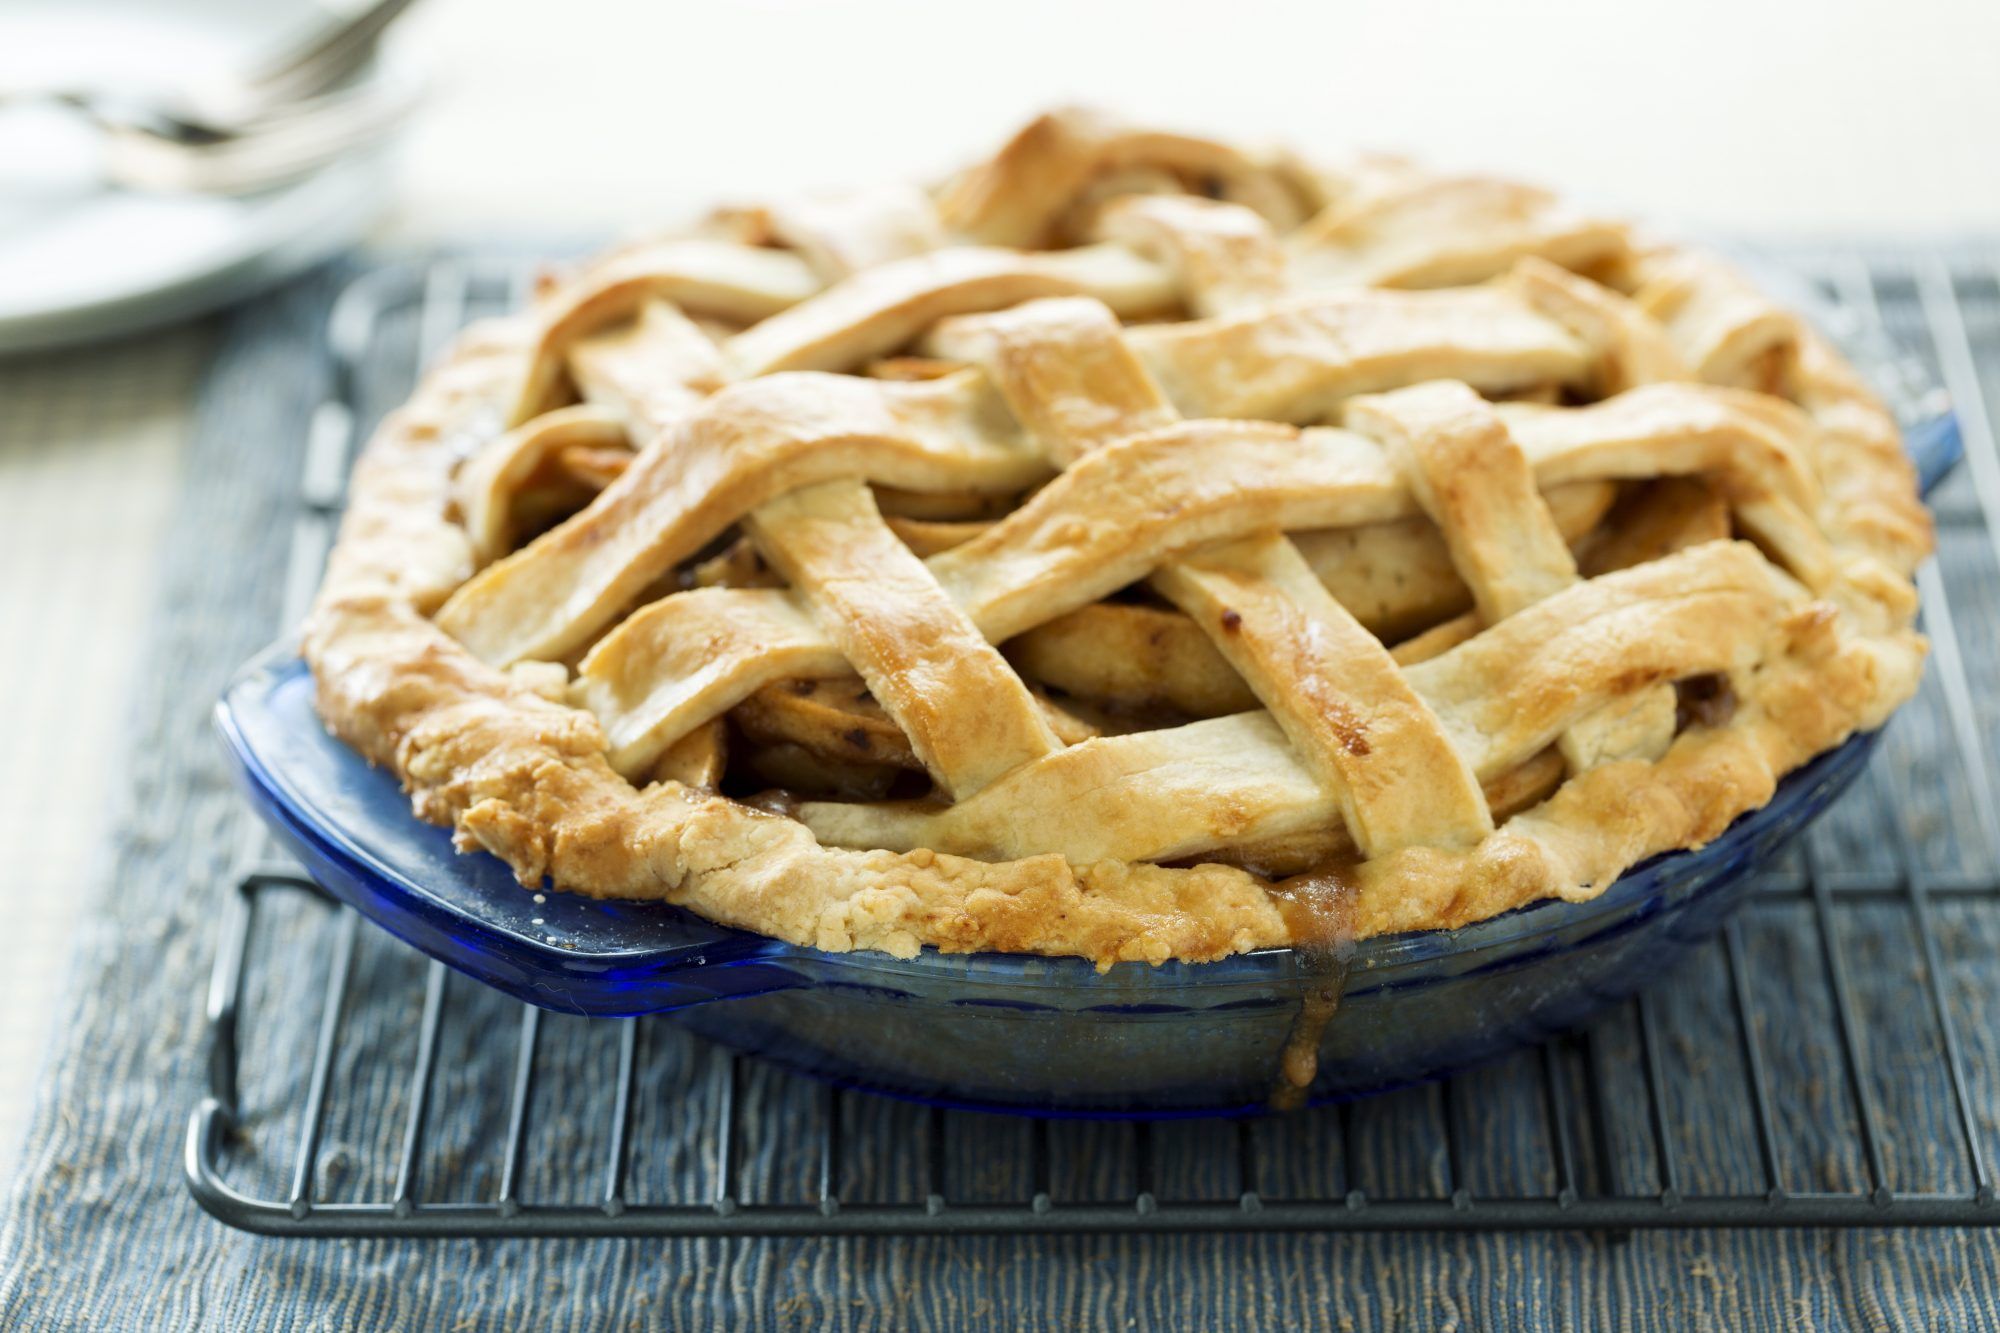 Thomas Keller's Secrets to Making the Best Apple Pie